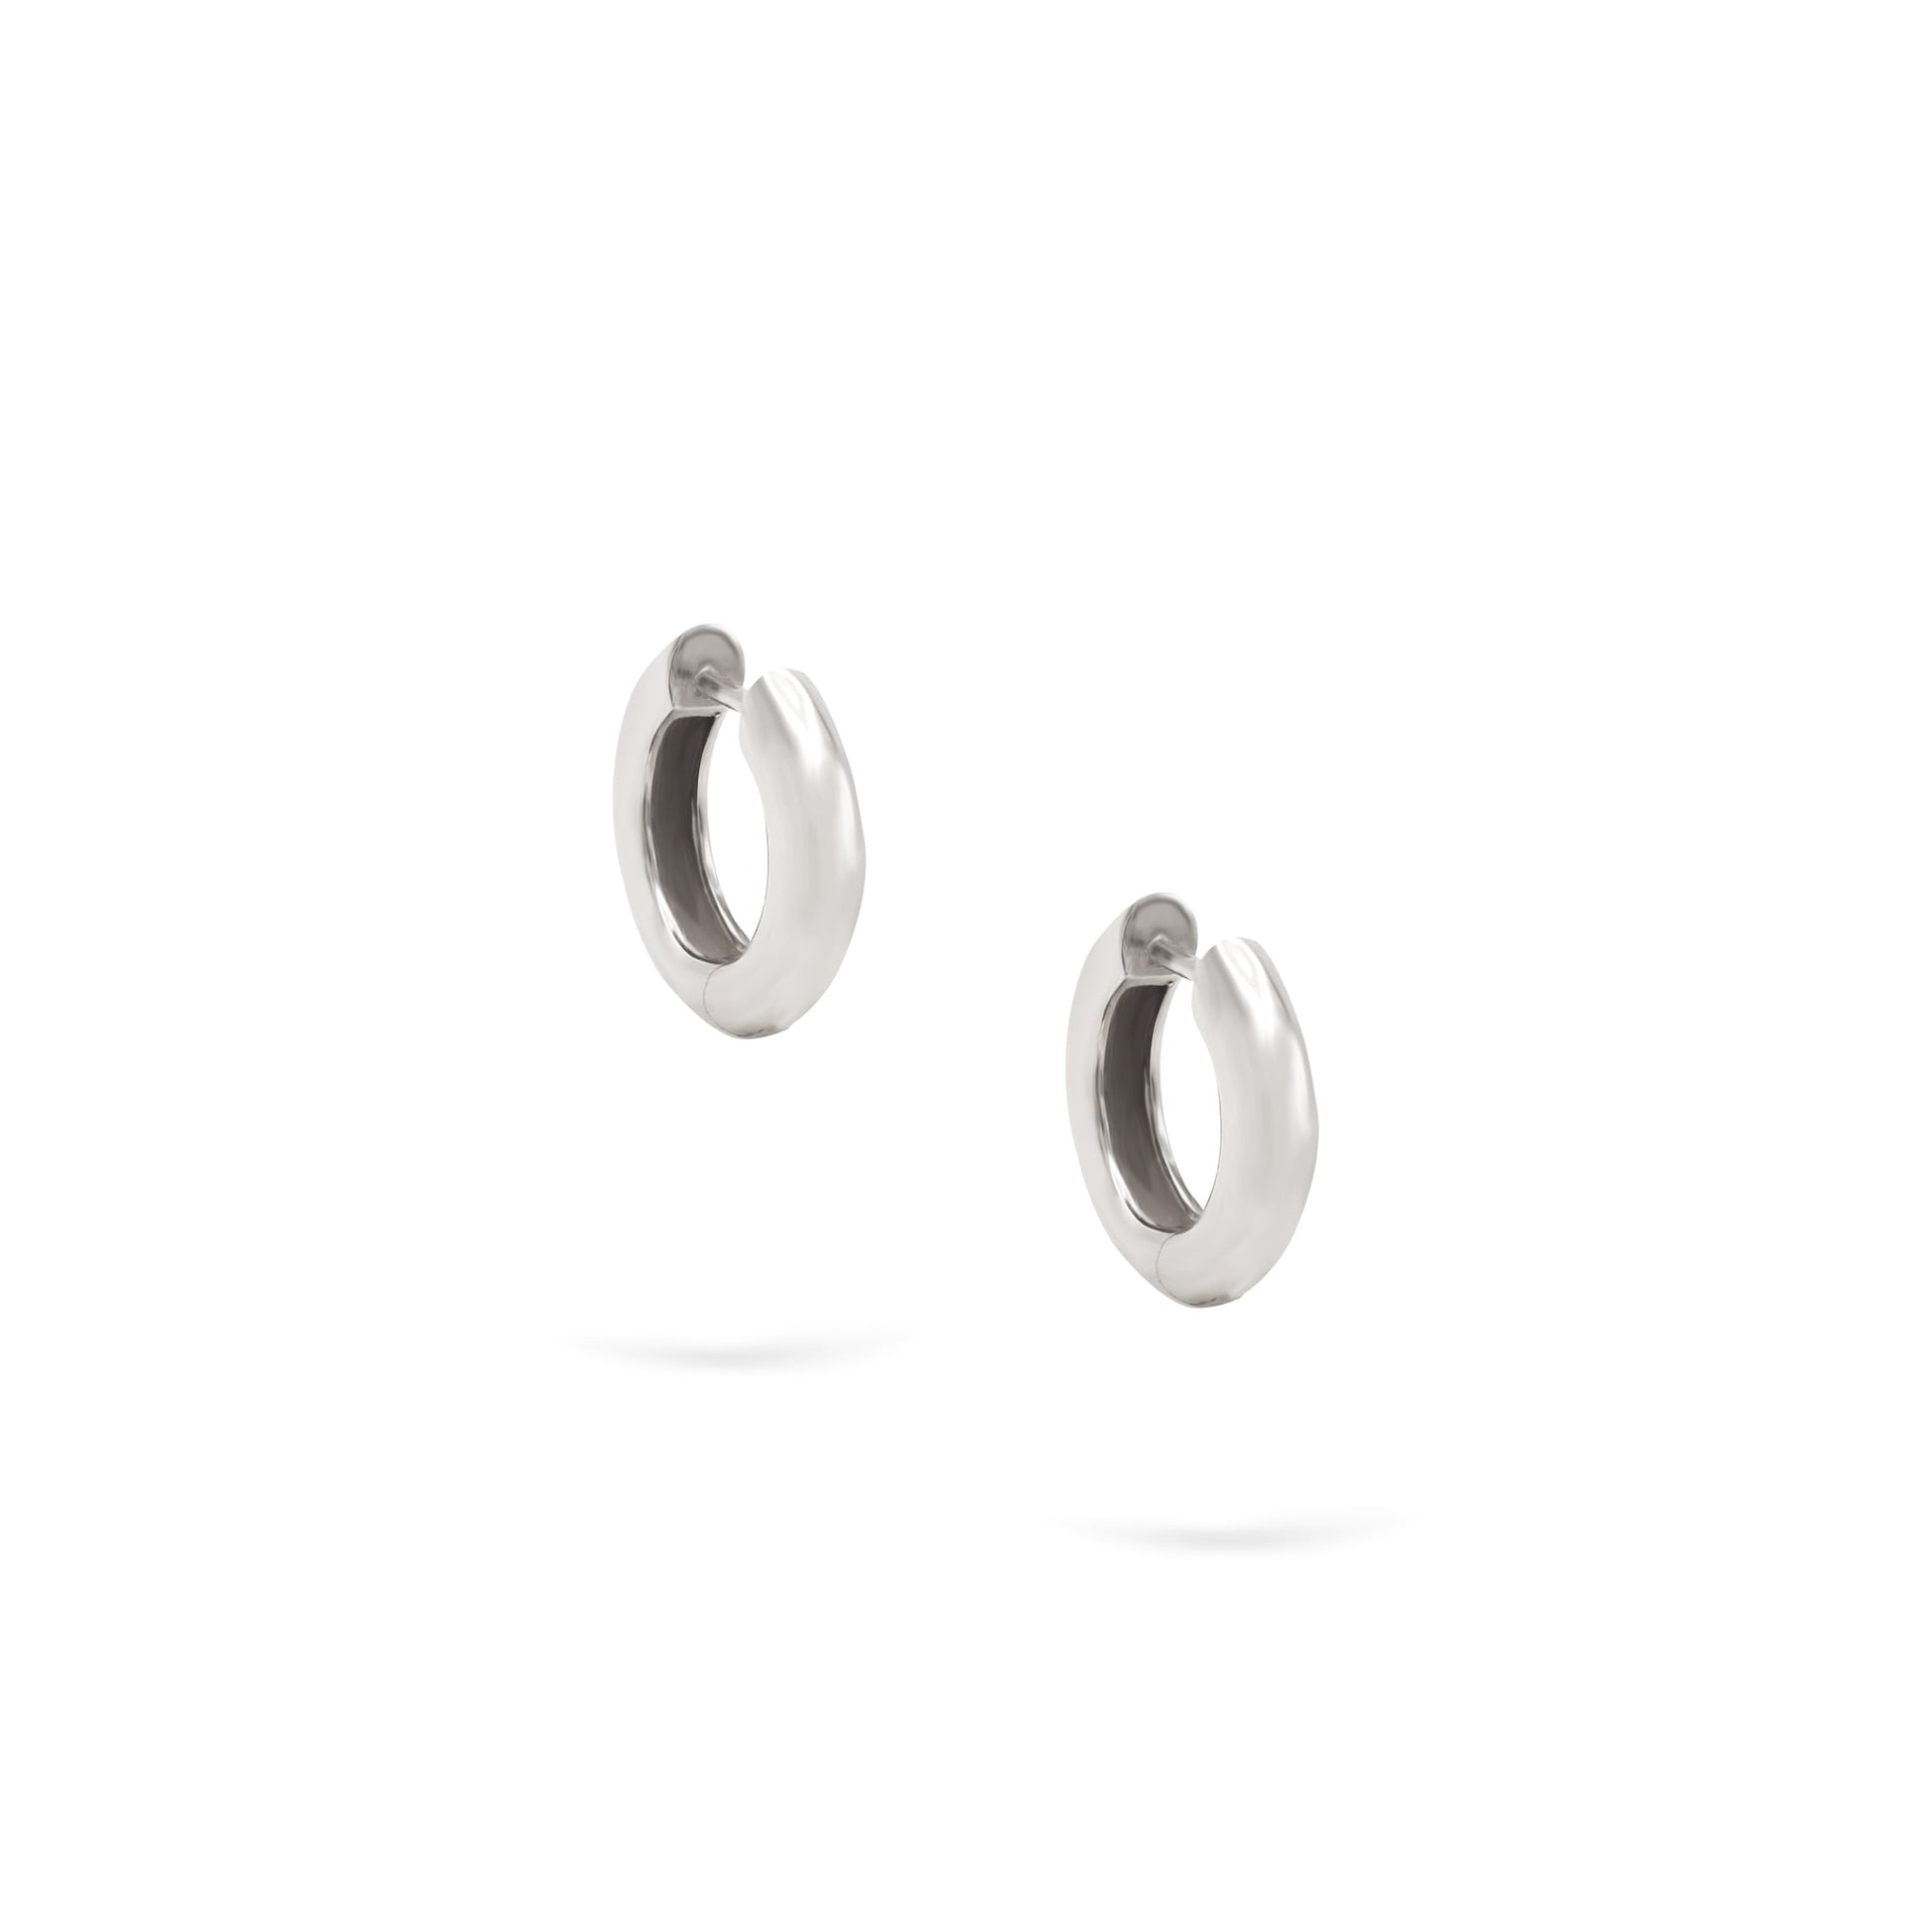 Jewelry Goldens Hoops | Small Gold Earrings | 14K - White / Pair - earrings Zengoda Shop online from Artisan